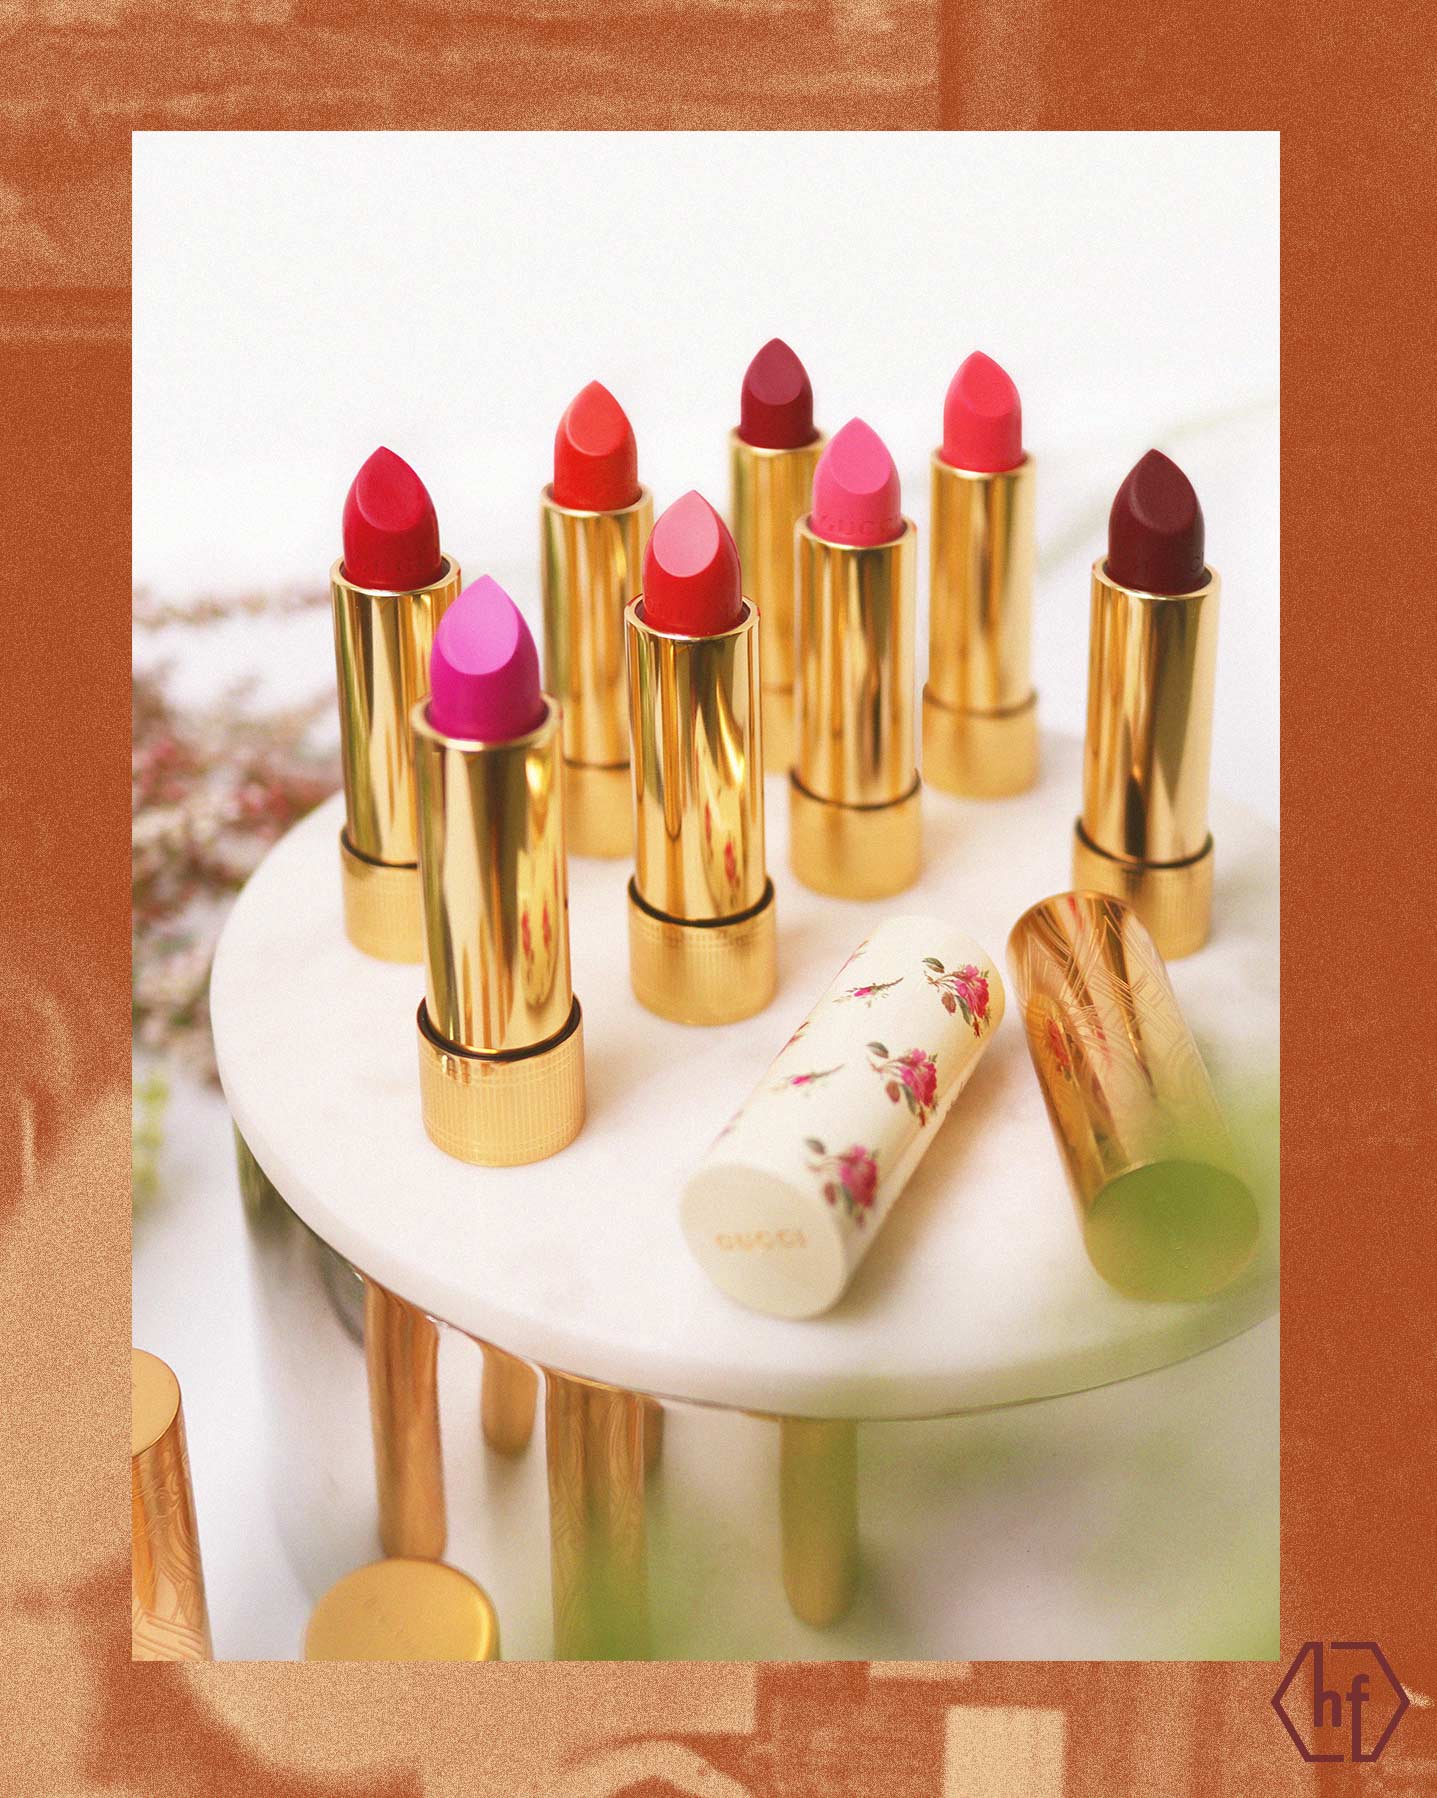 gucci-beauty-restage-58-shades-lipstick-4